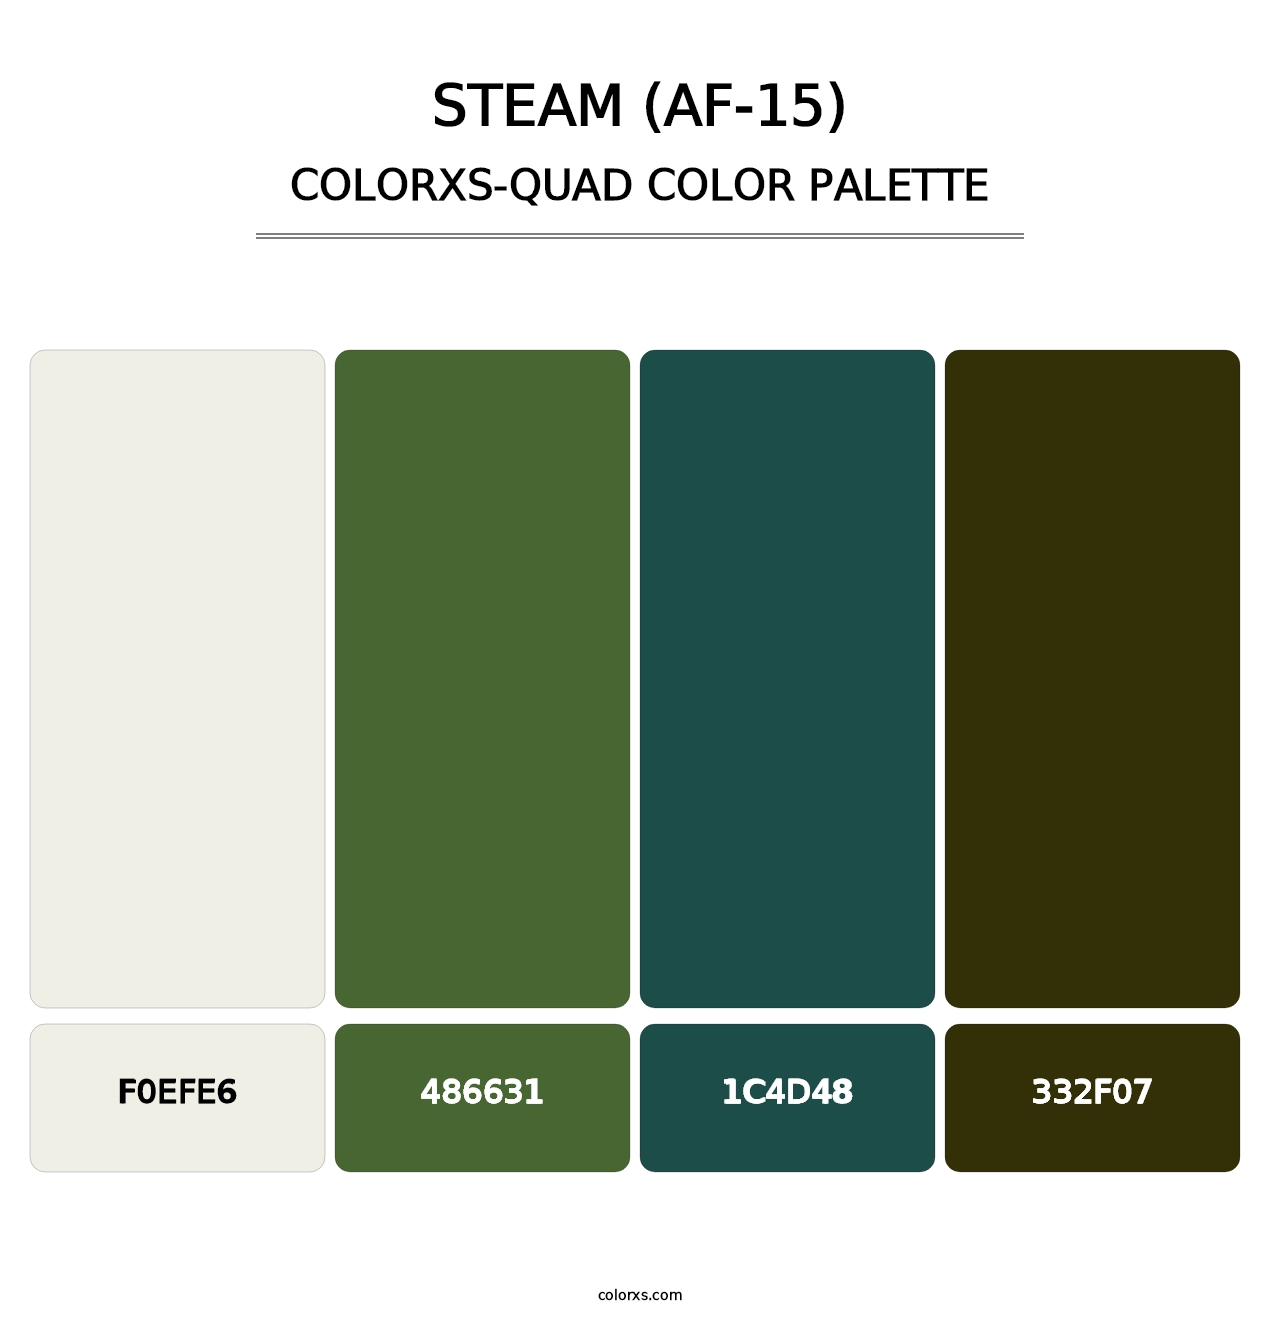 Steam (AF-15) - Colorxs Quad Palette